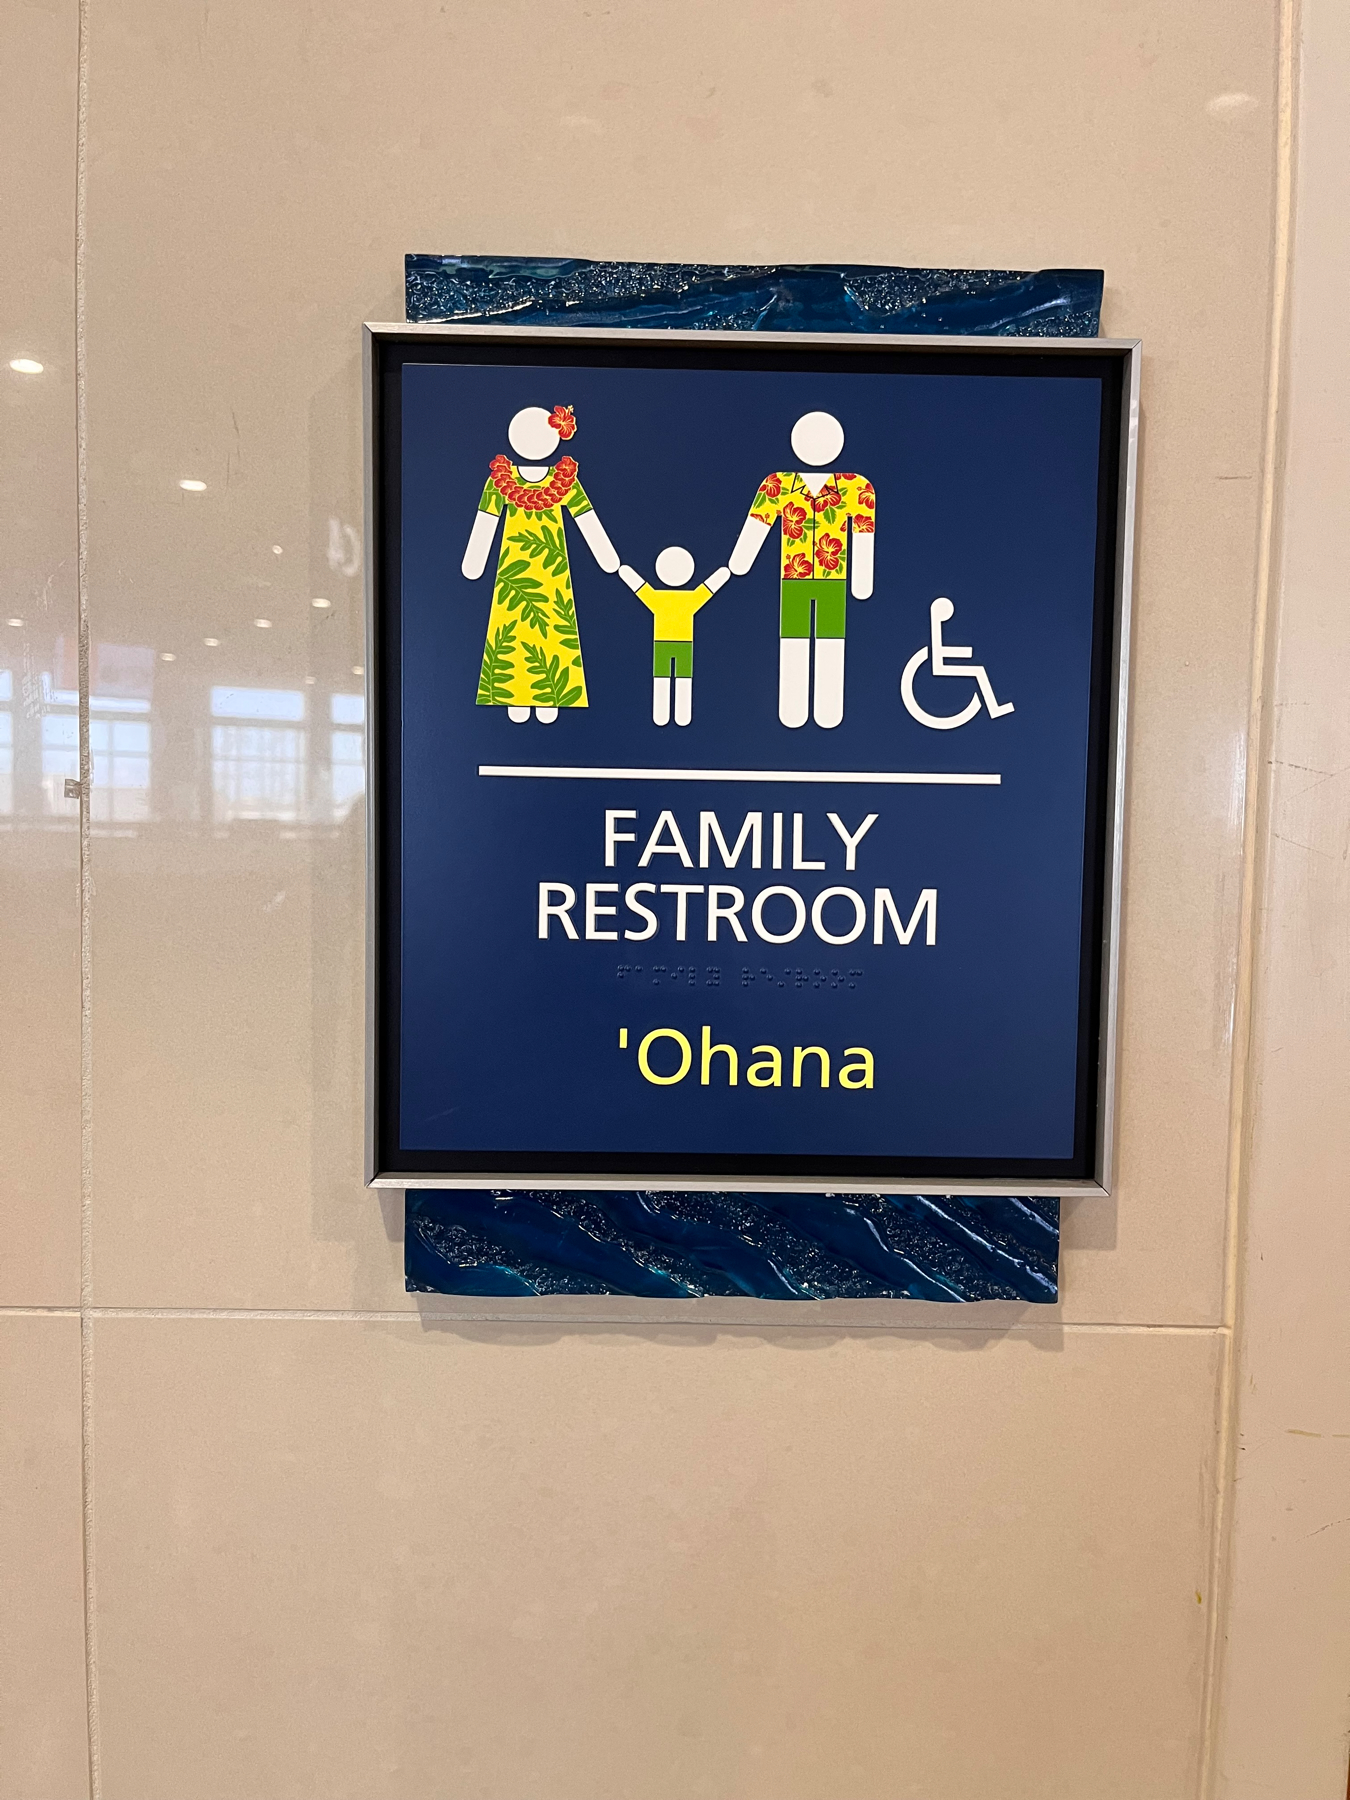 Family restroom Honolulu airport